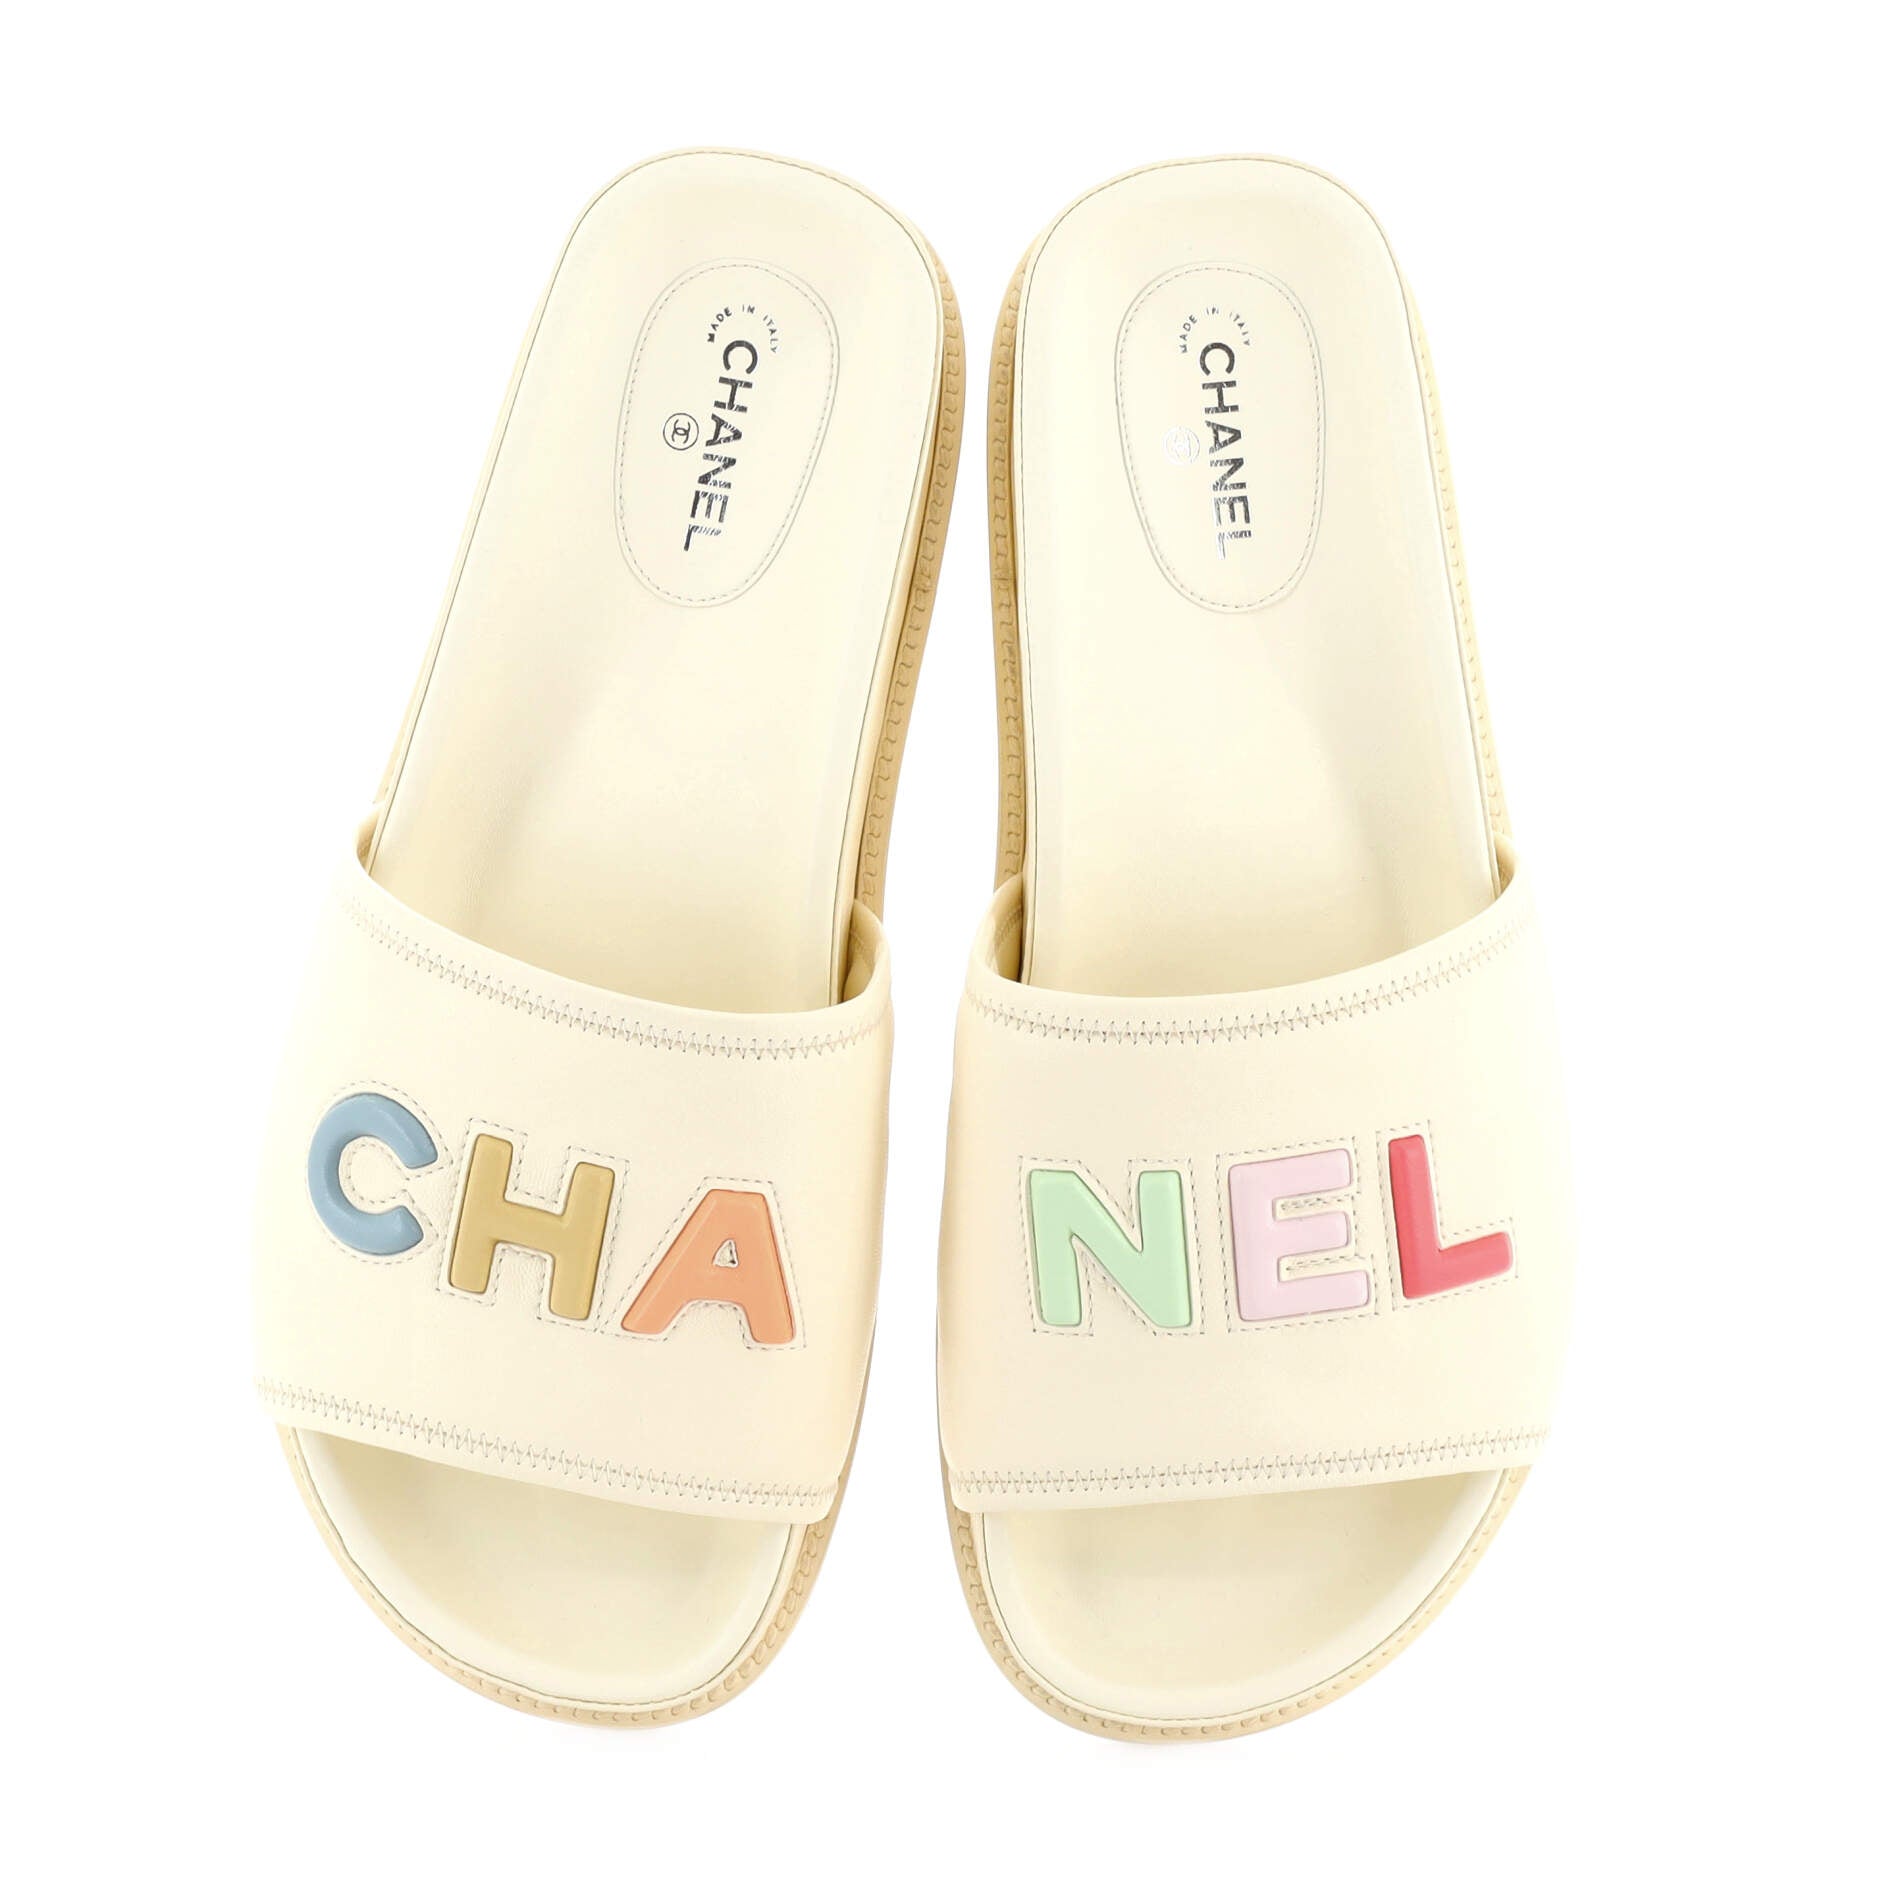 CHANEL Women's Logo Letters Slide Sandals Leather